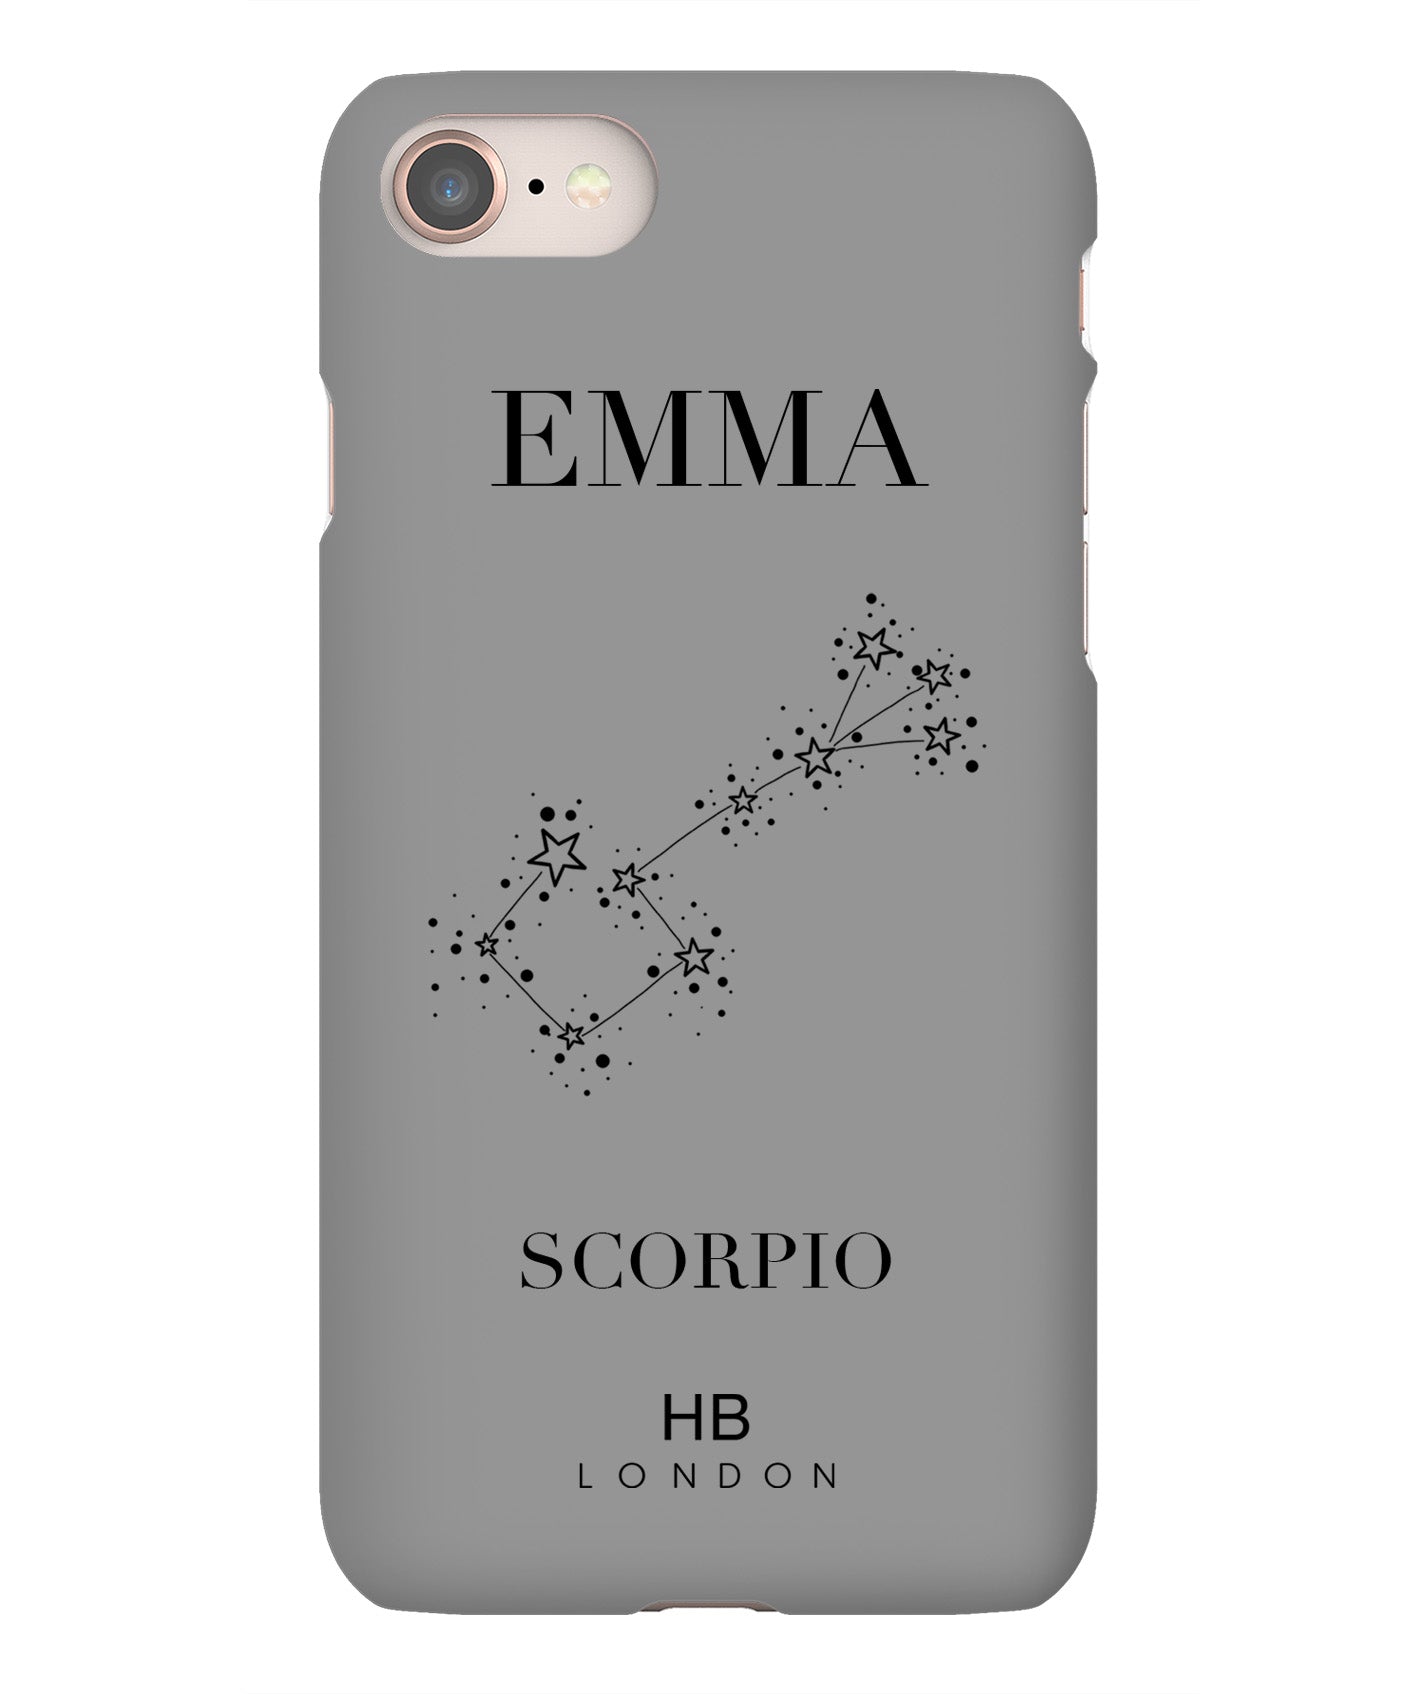 Personalised Scorpio Phone Case - HB LONDON